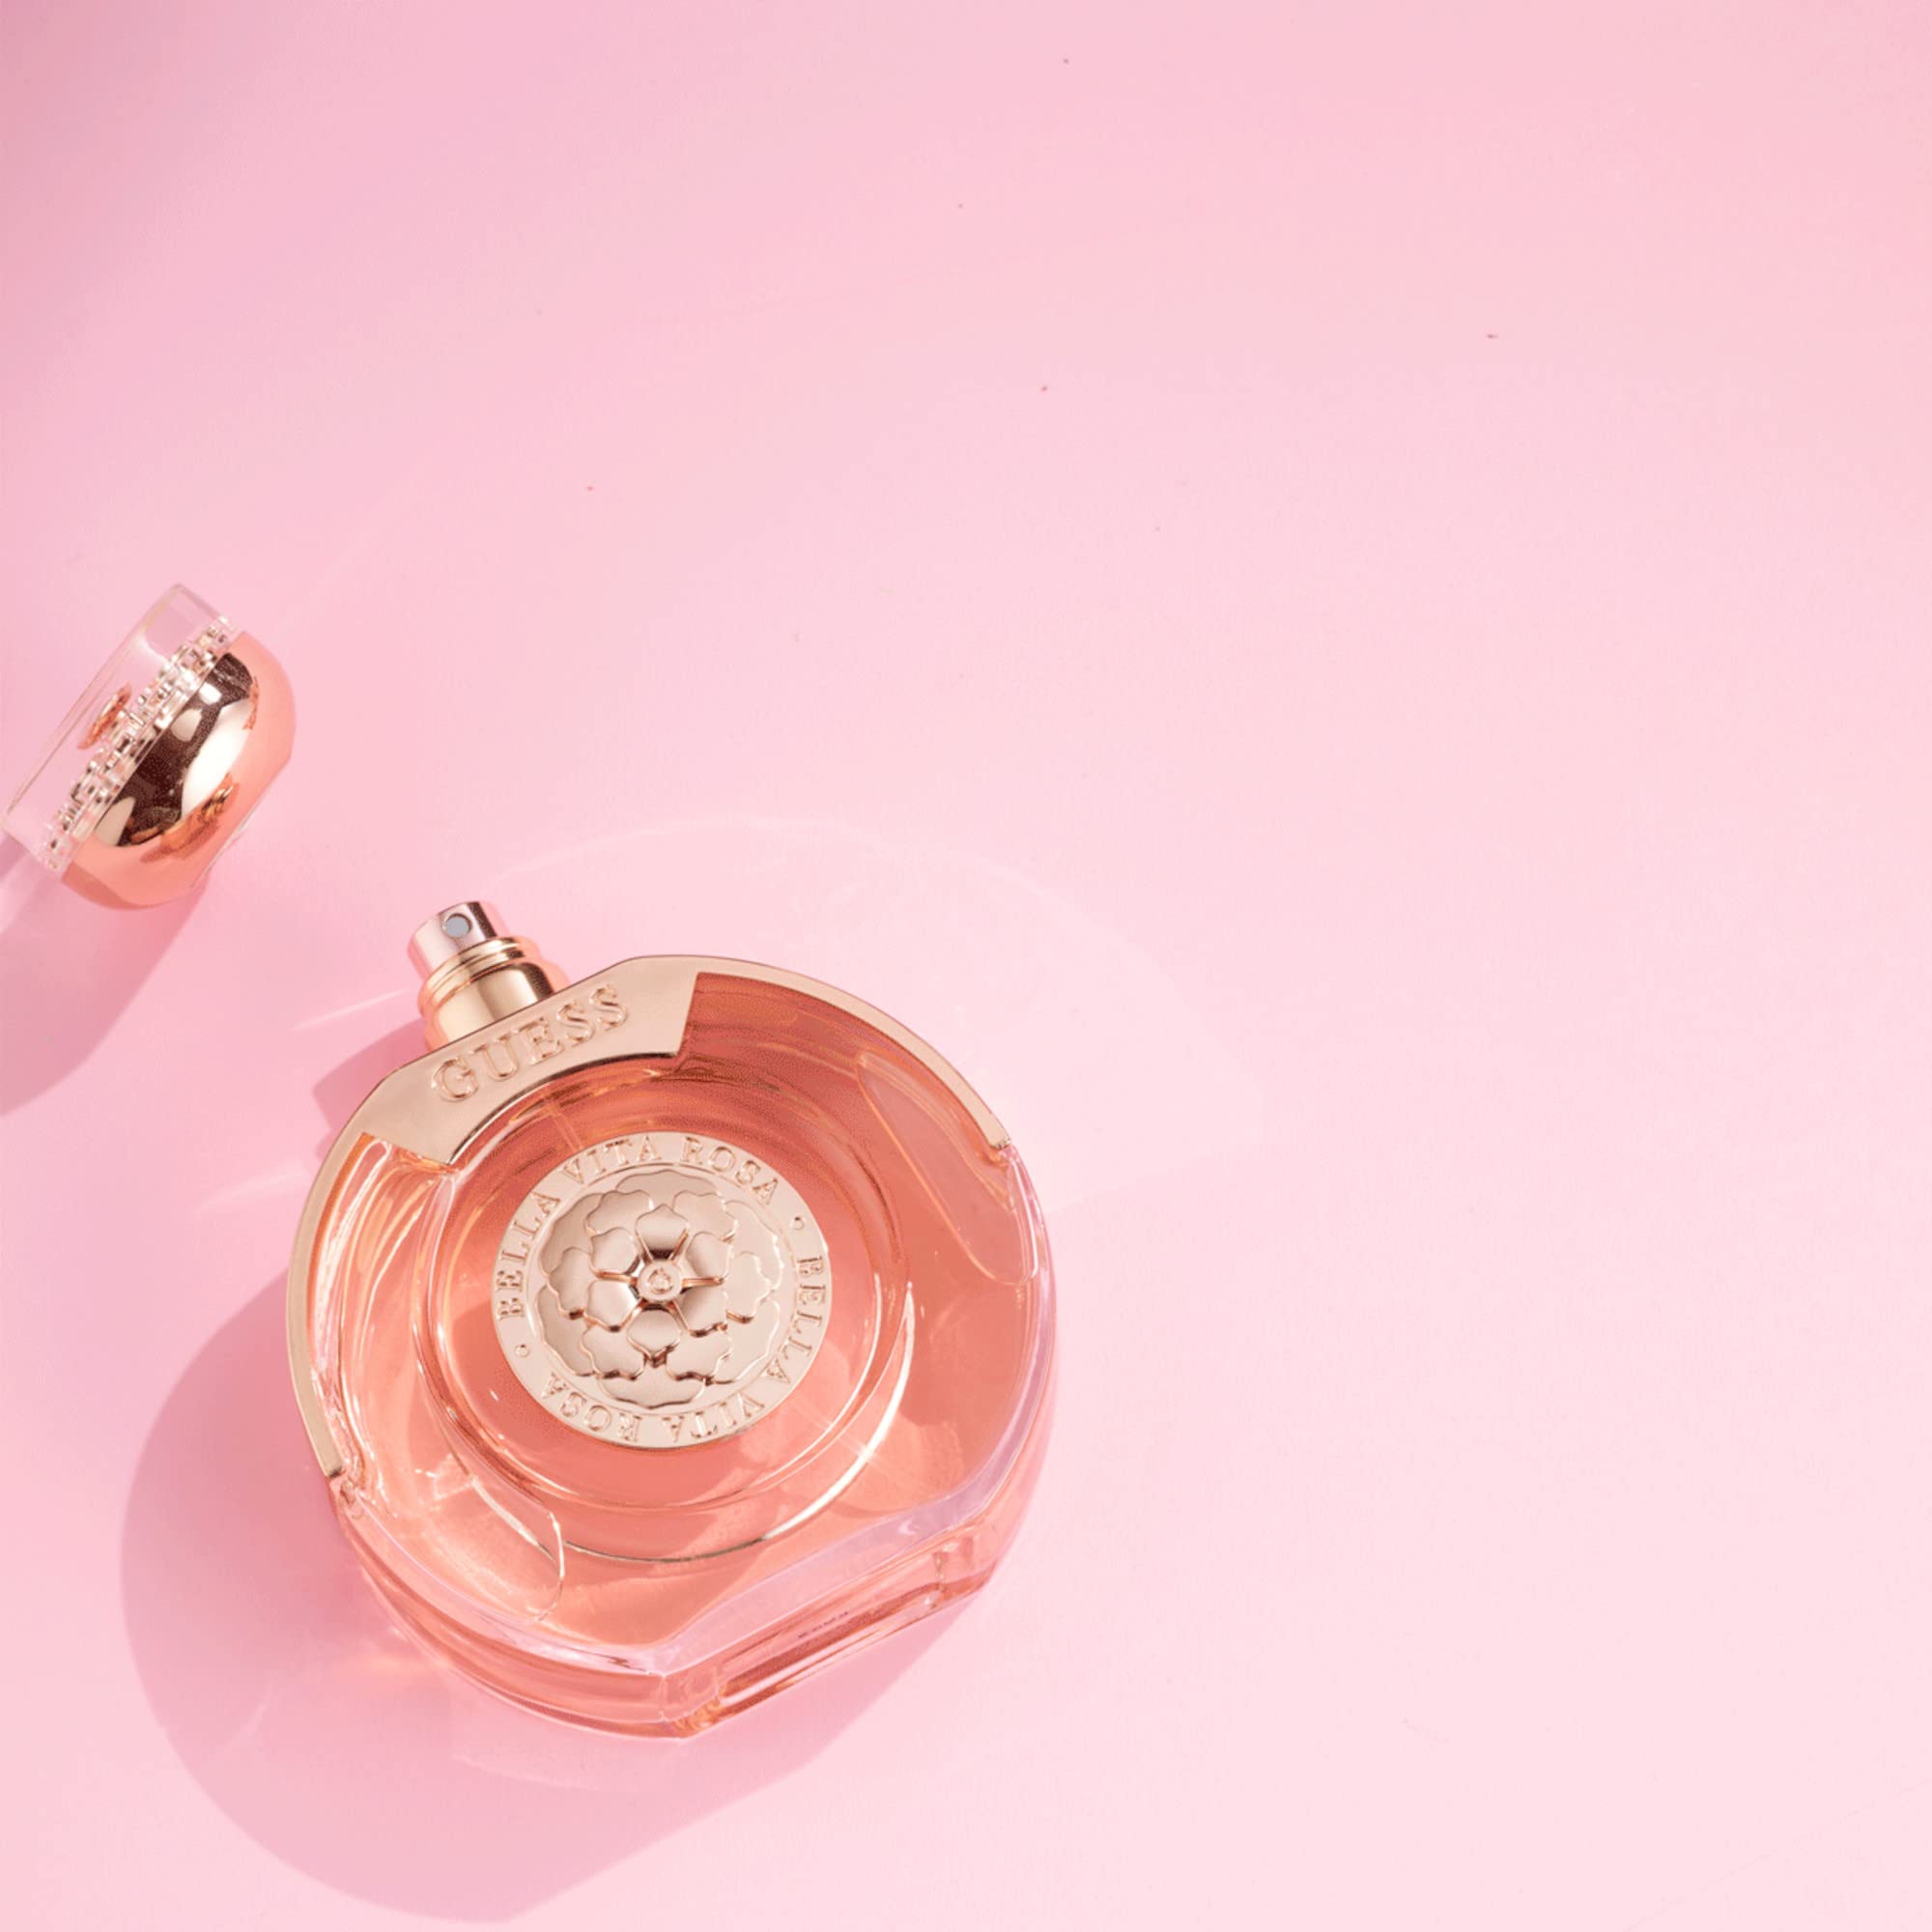 Guess Bella Vita Rosa Body Mist | My Perfume Shop Australia